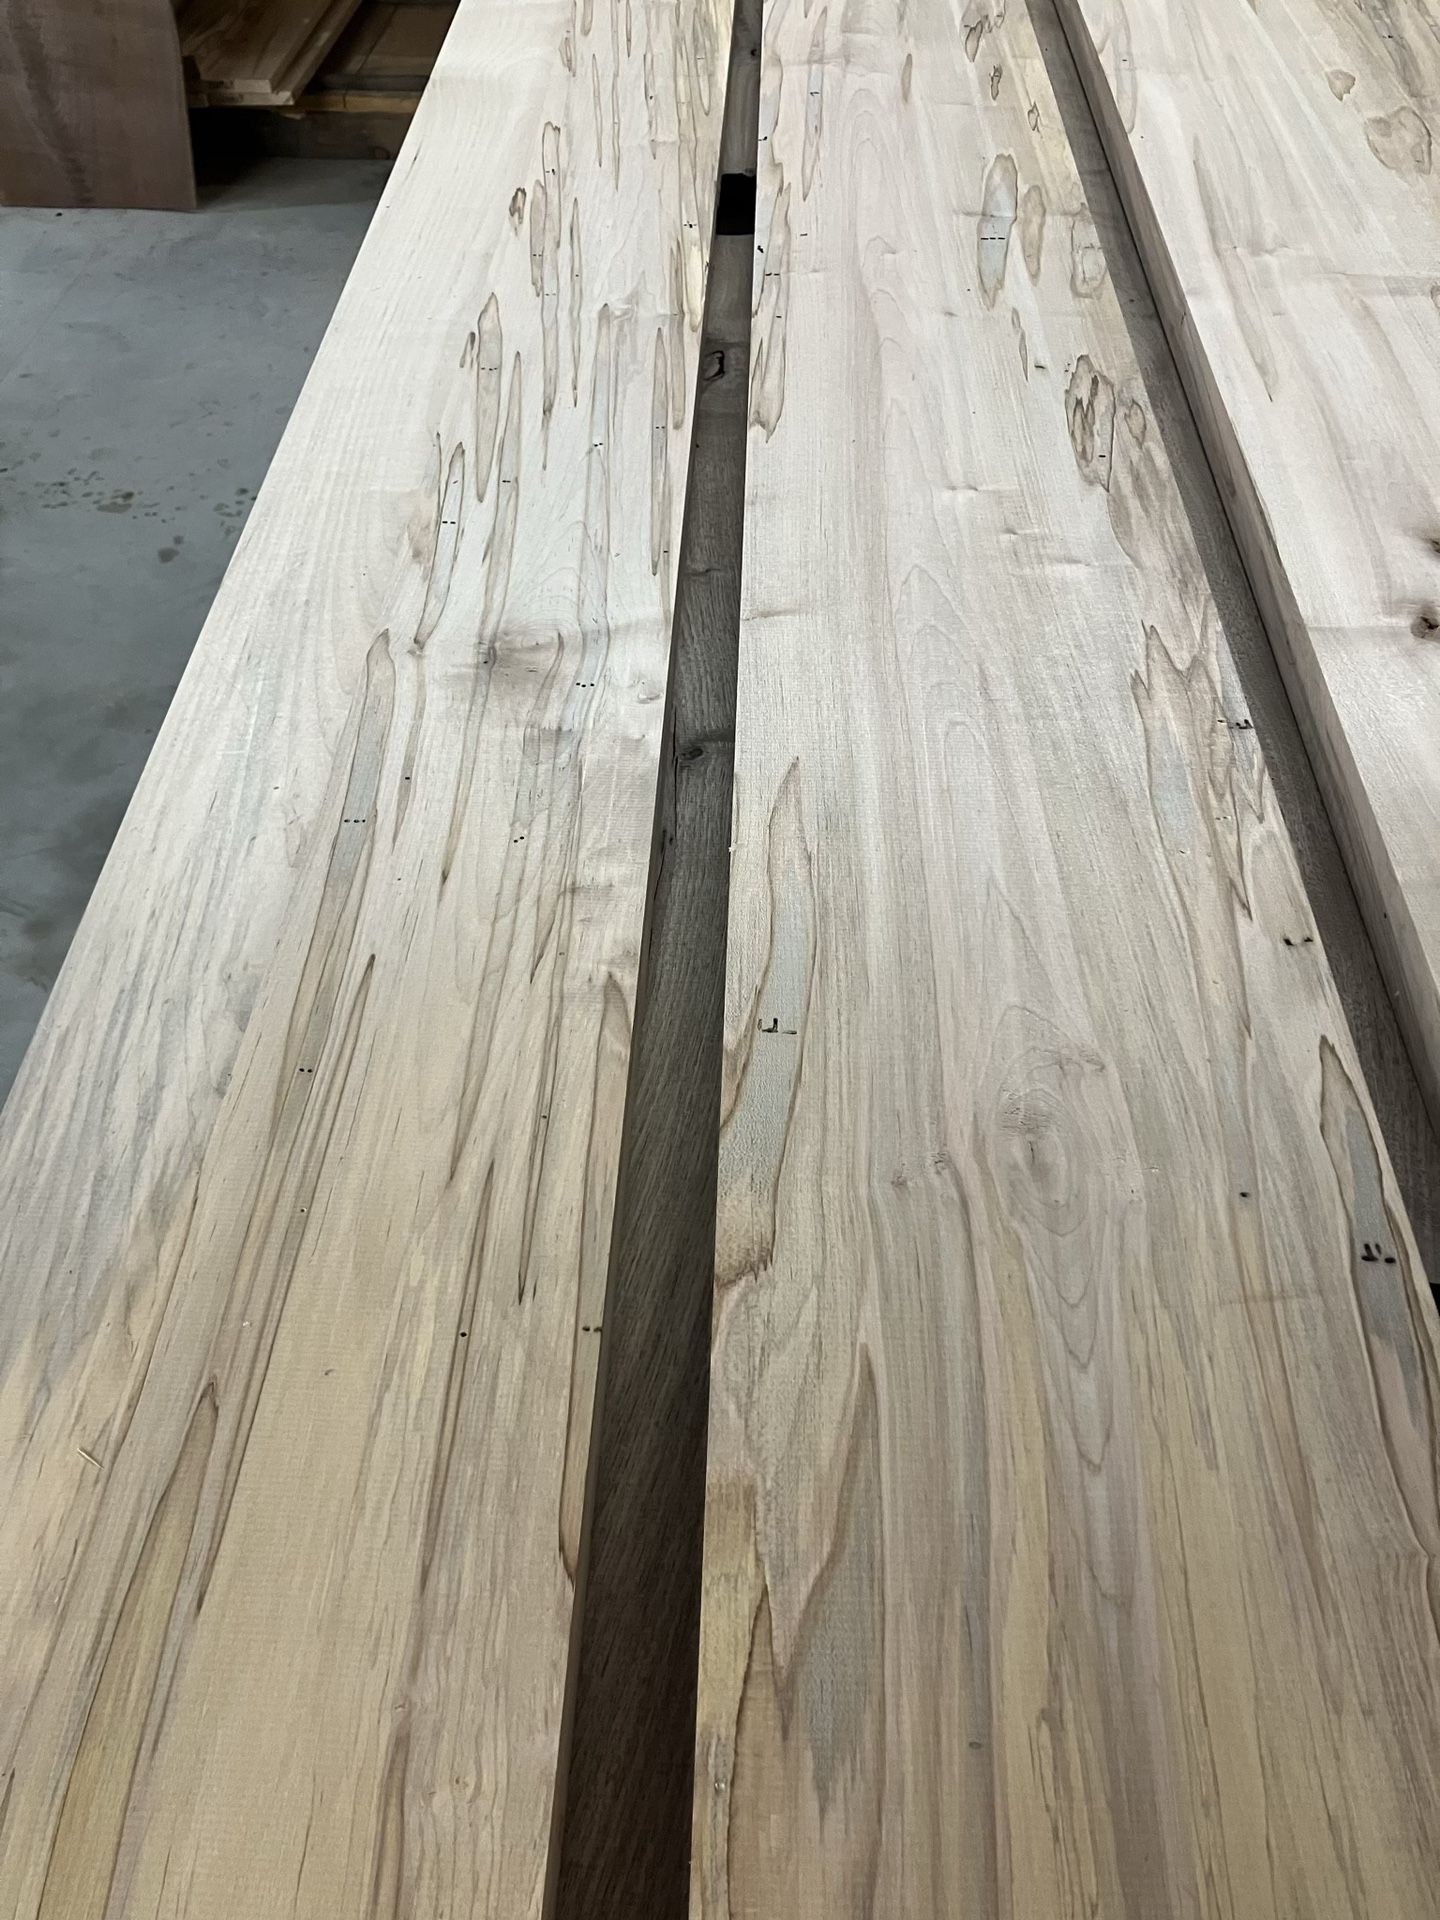 1.5” Ambrosia Maple Lumber